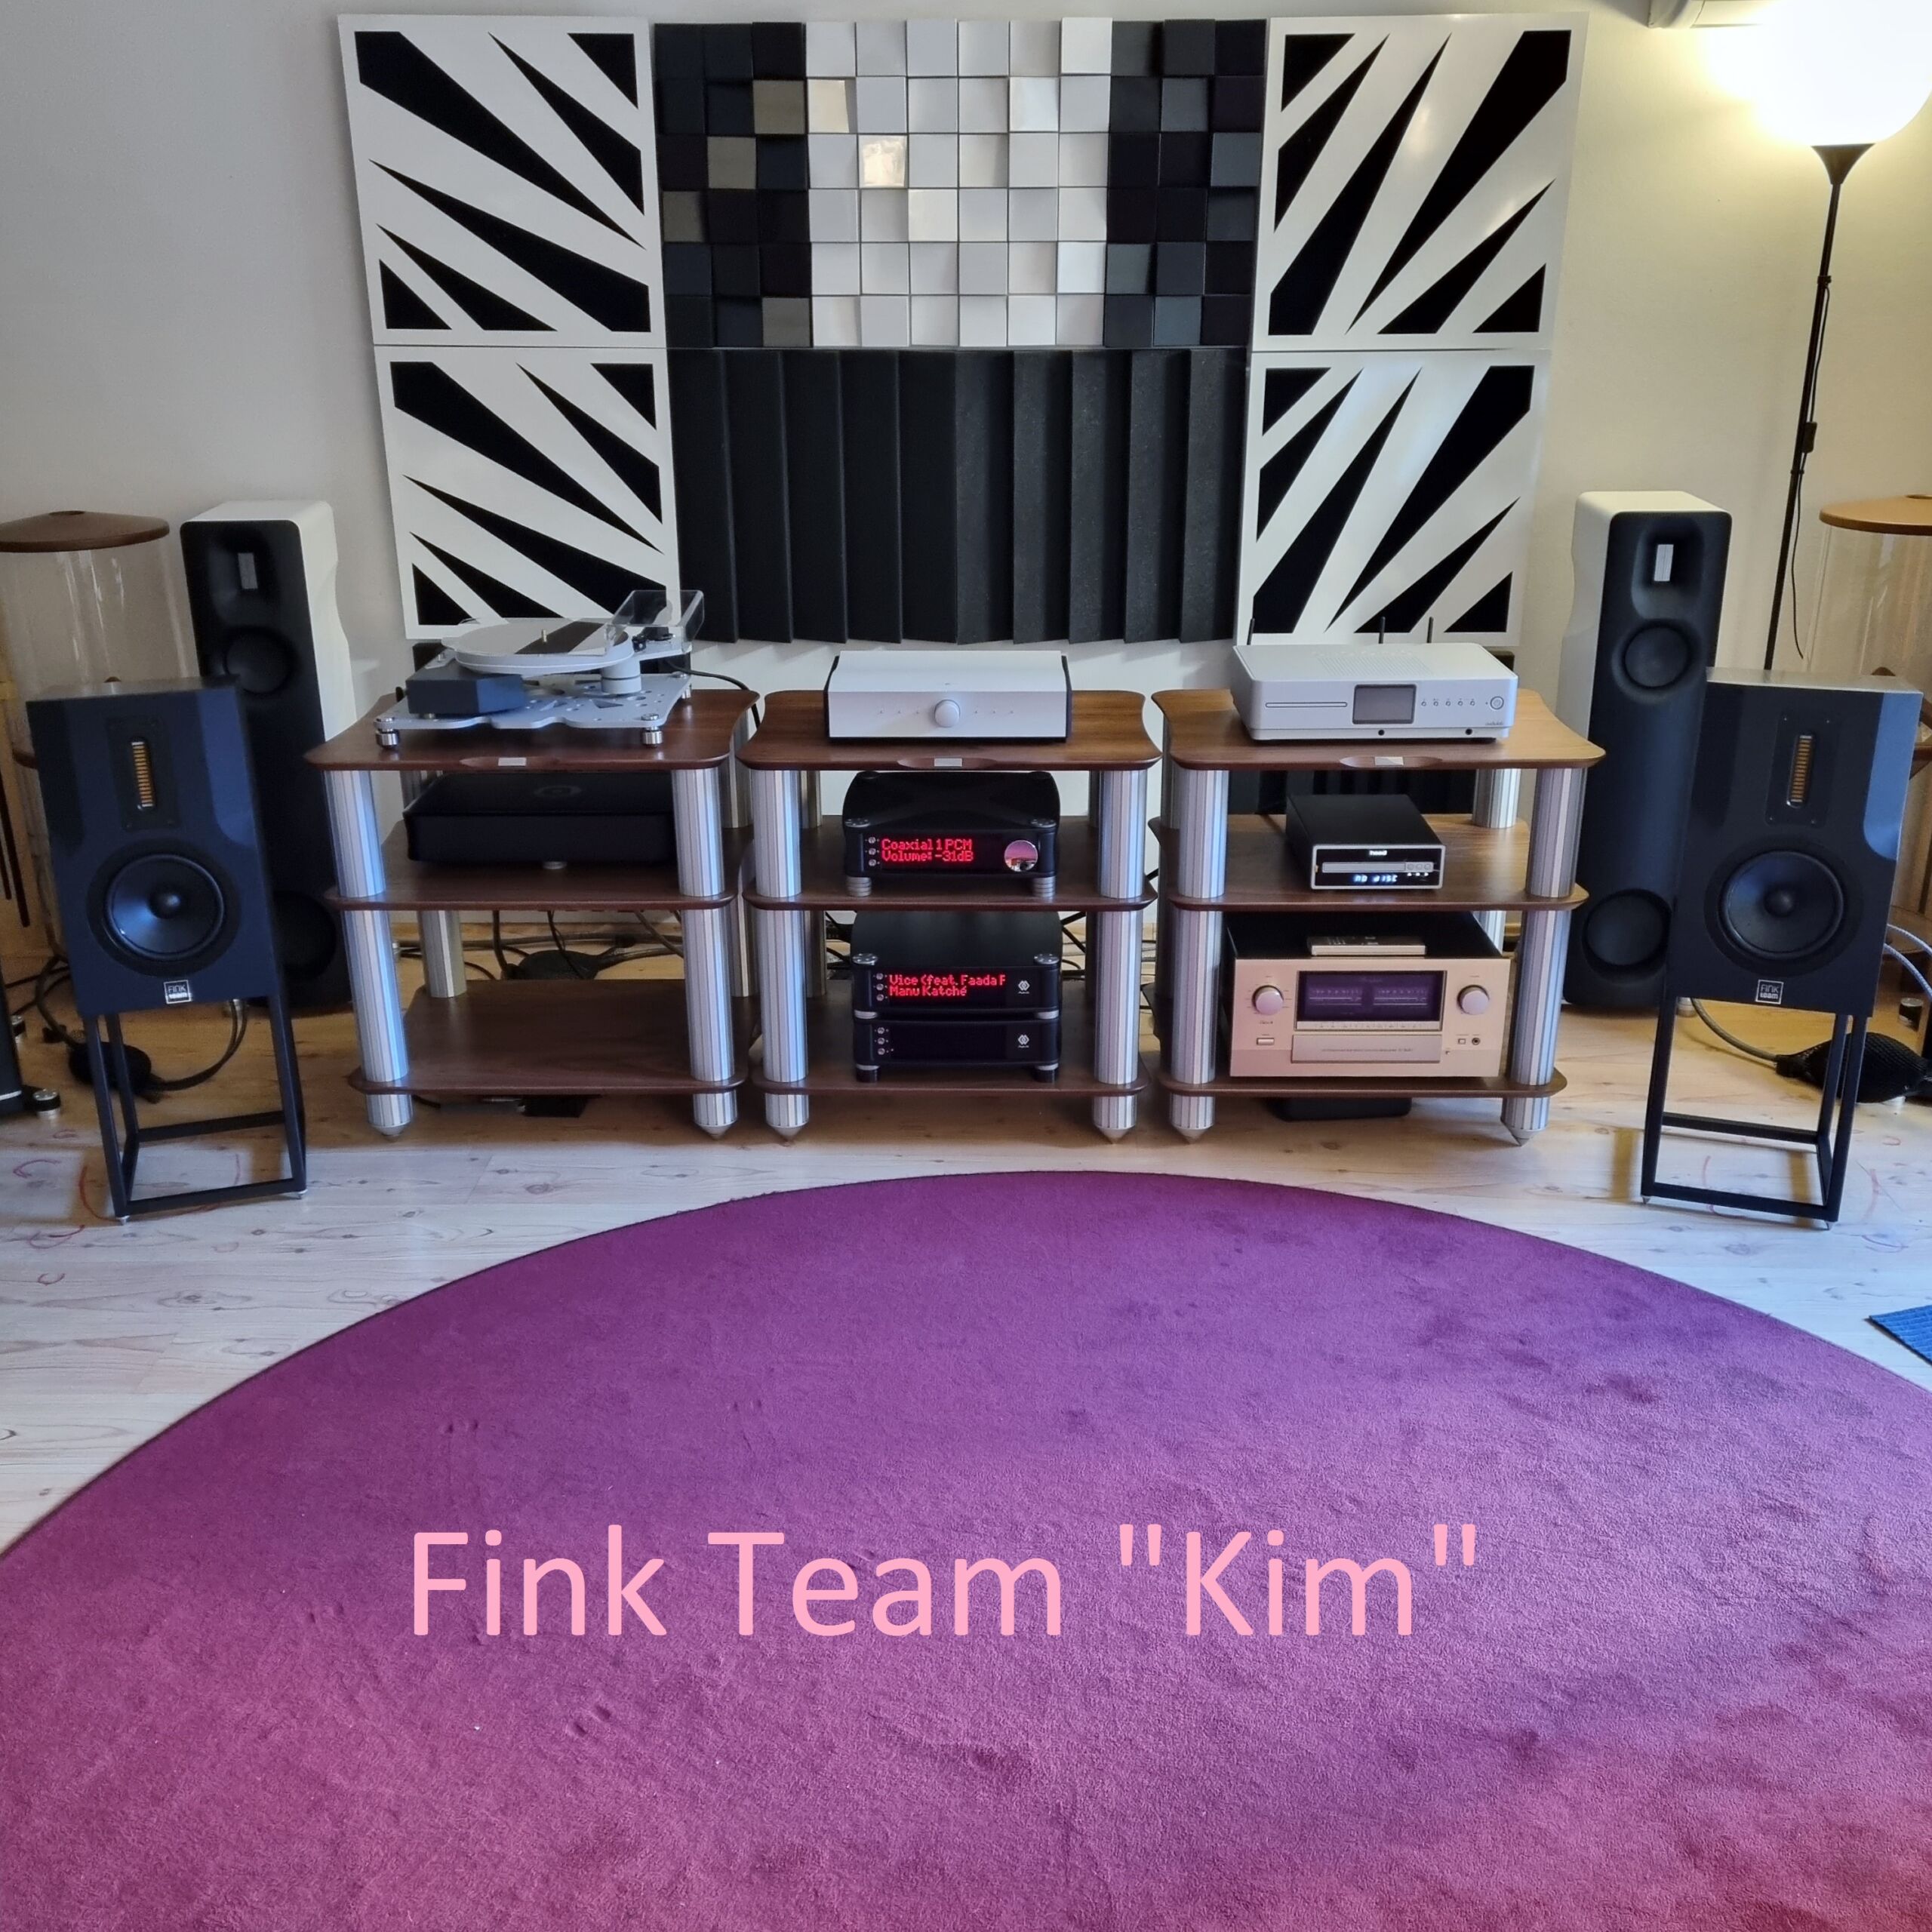 Fink Team Kim